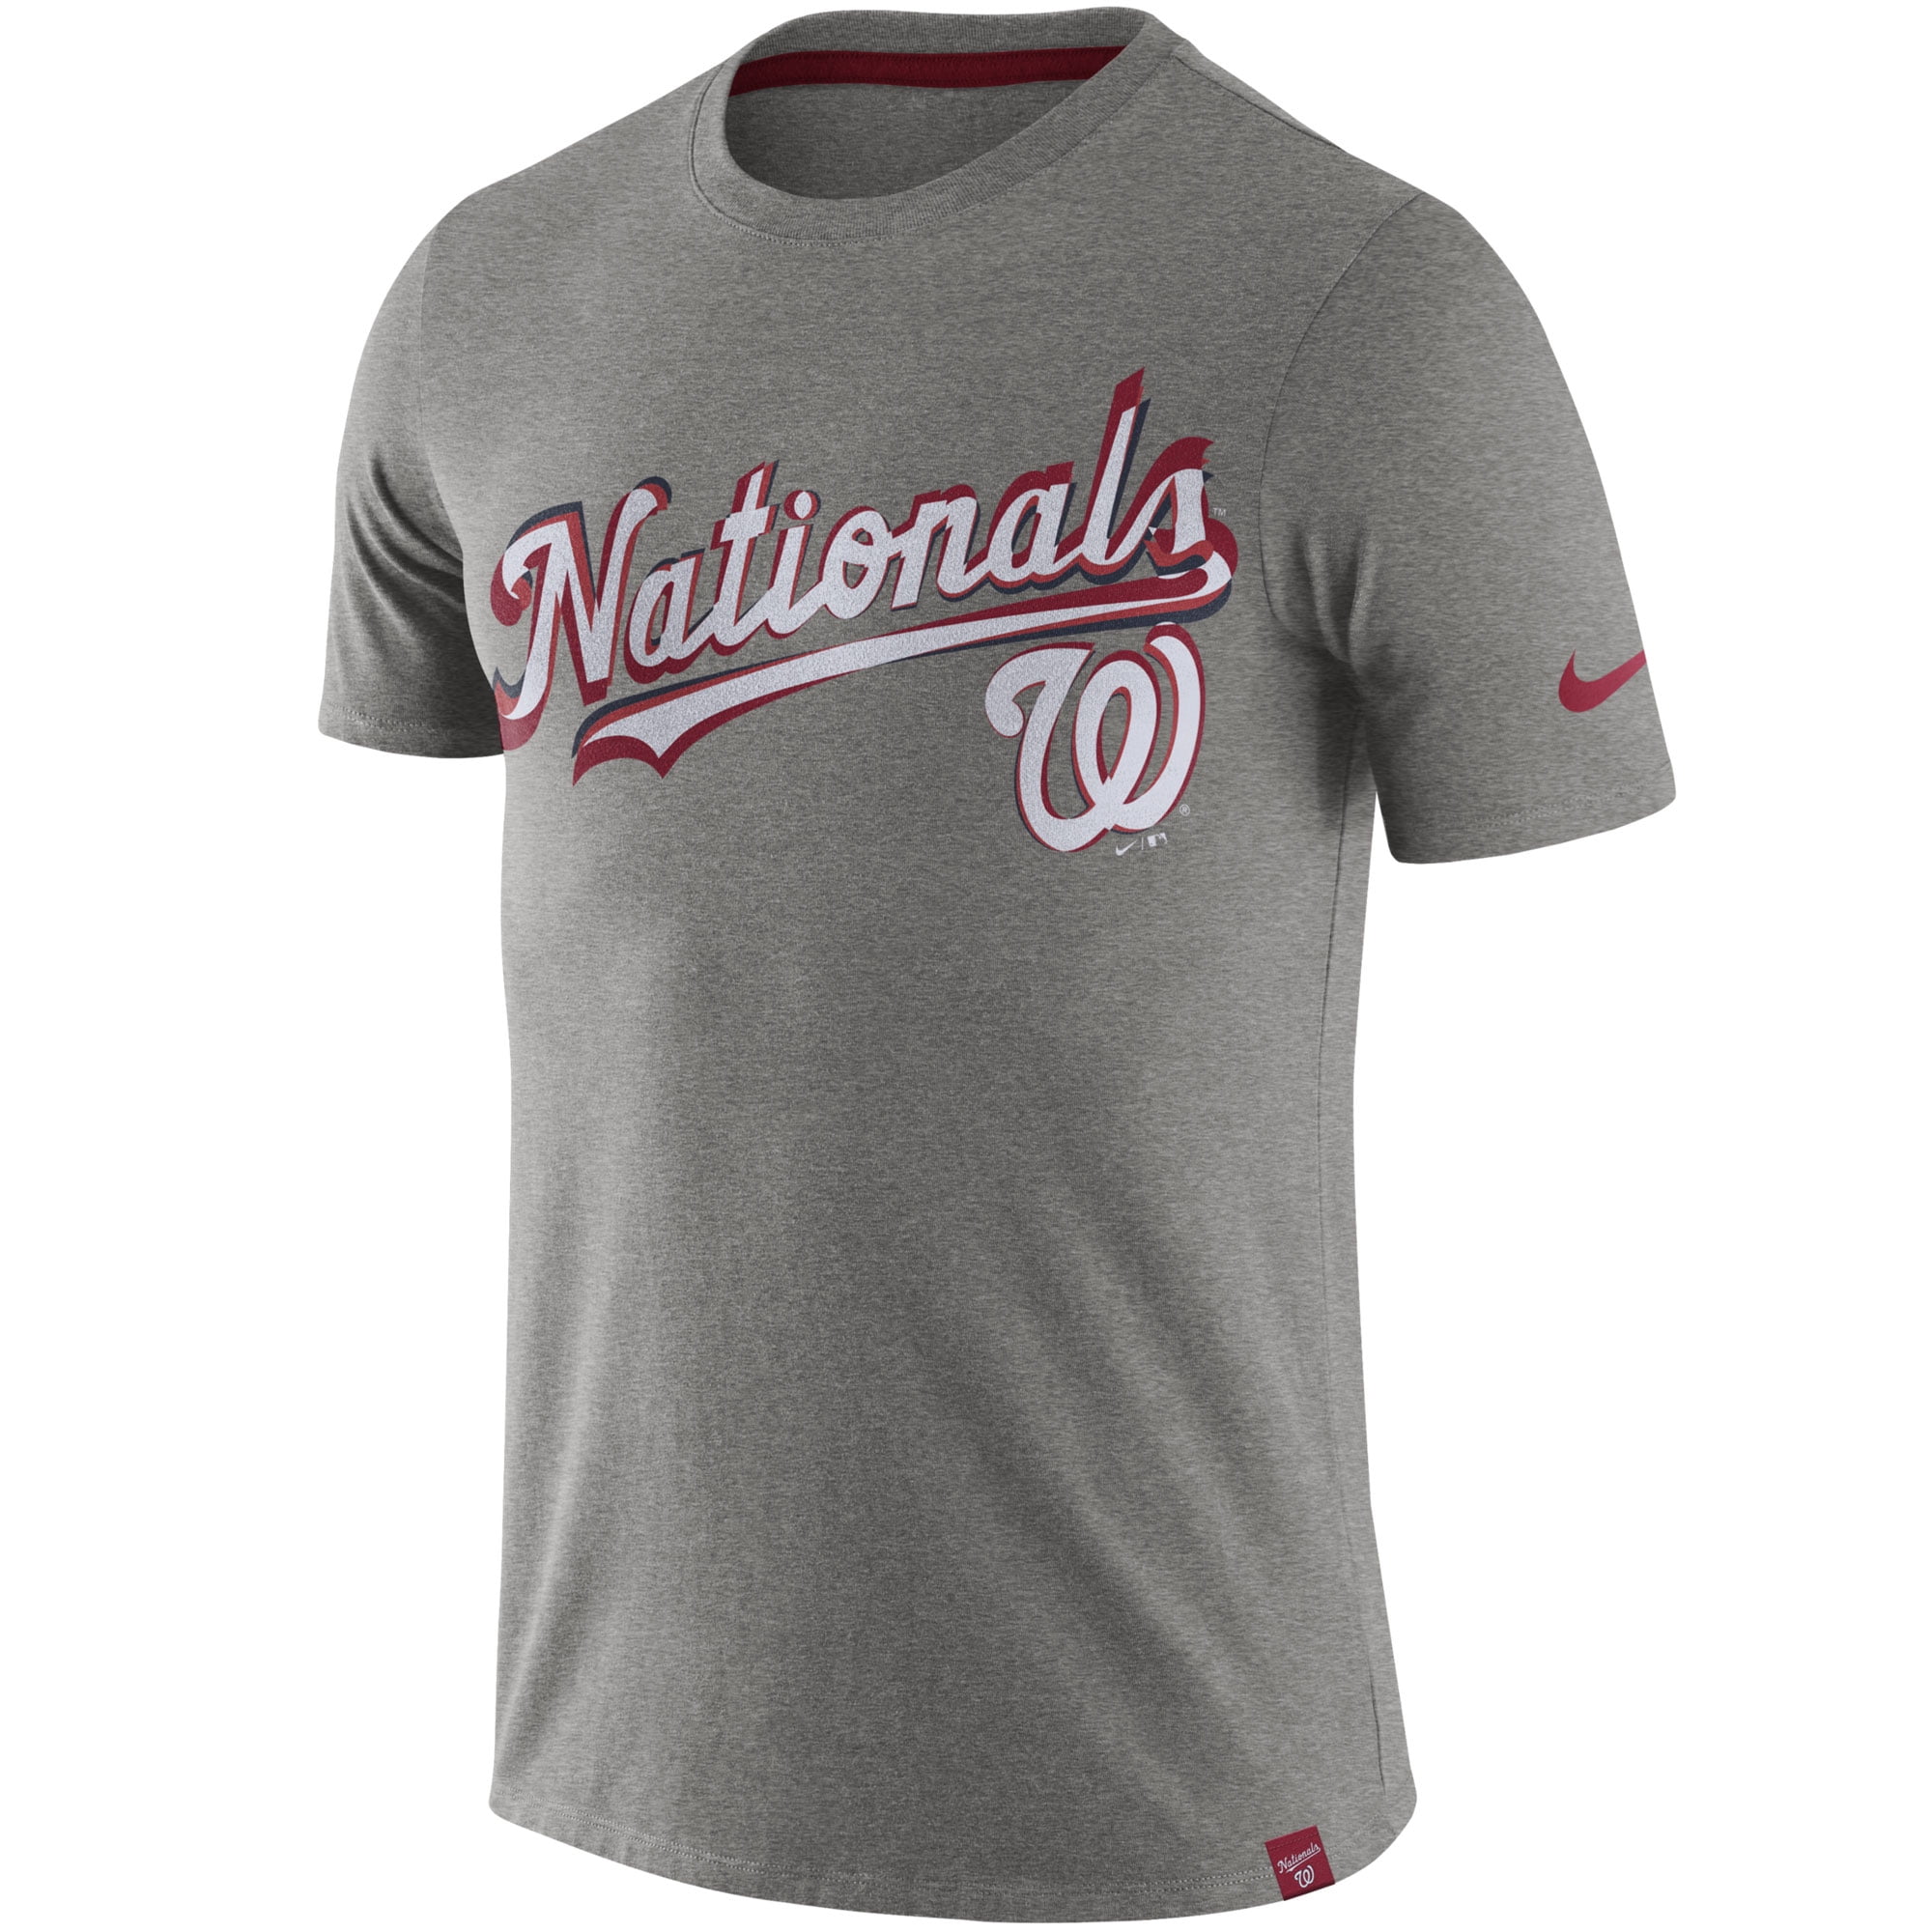 washington nationals gray jersey